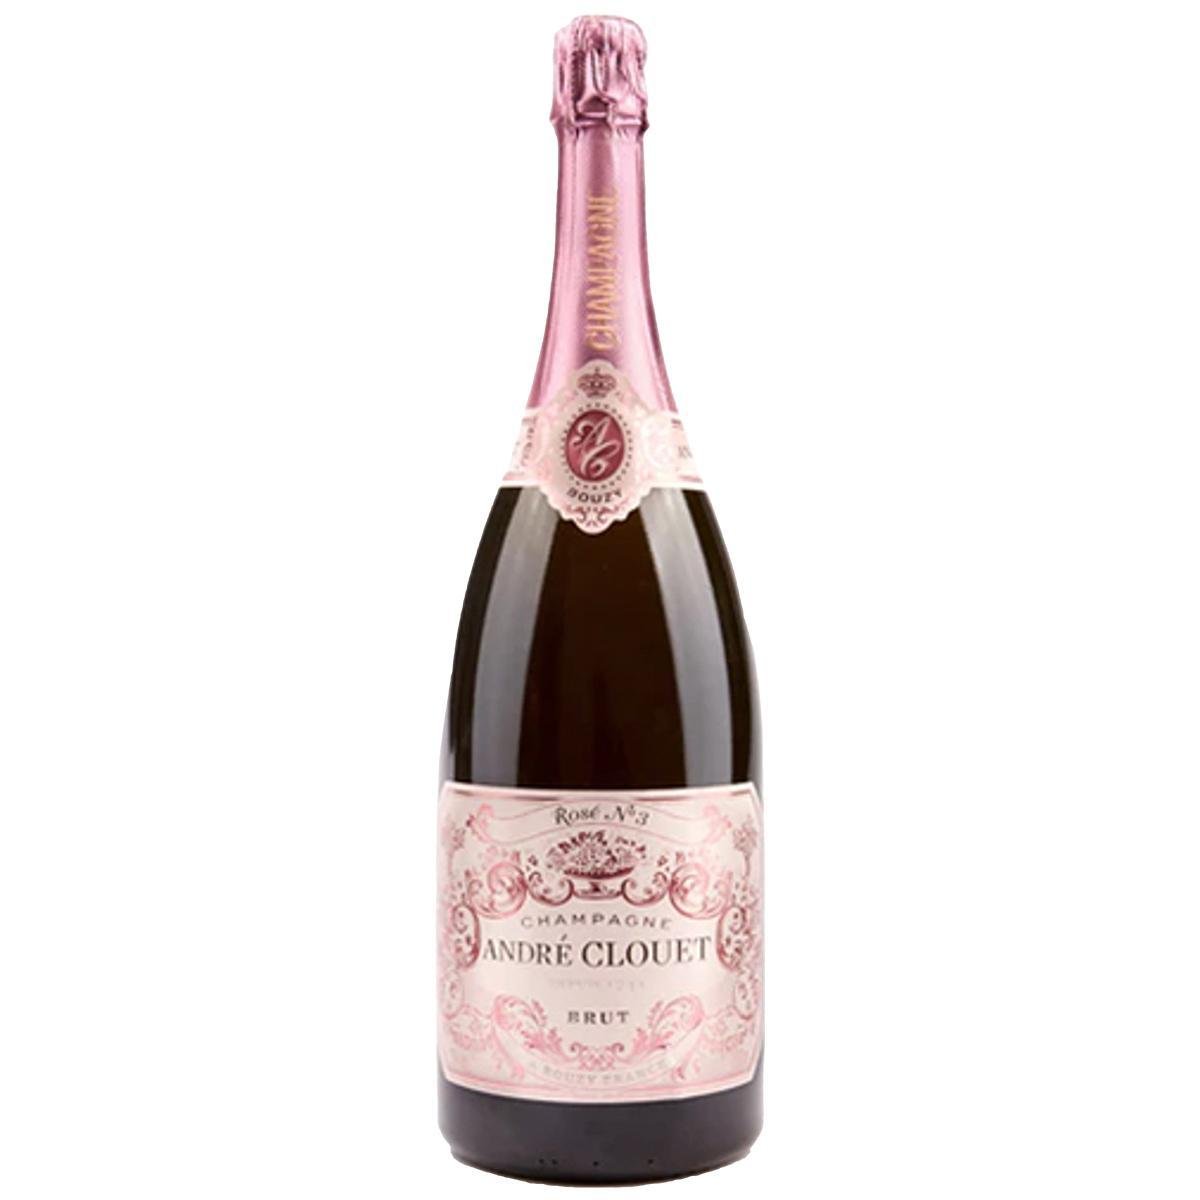 Andre Clouet Rose Champagne Brut - The Epicurean Trader